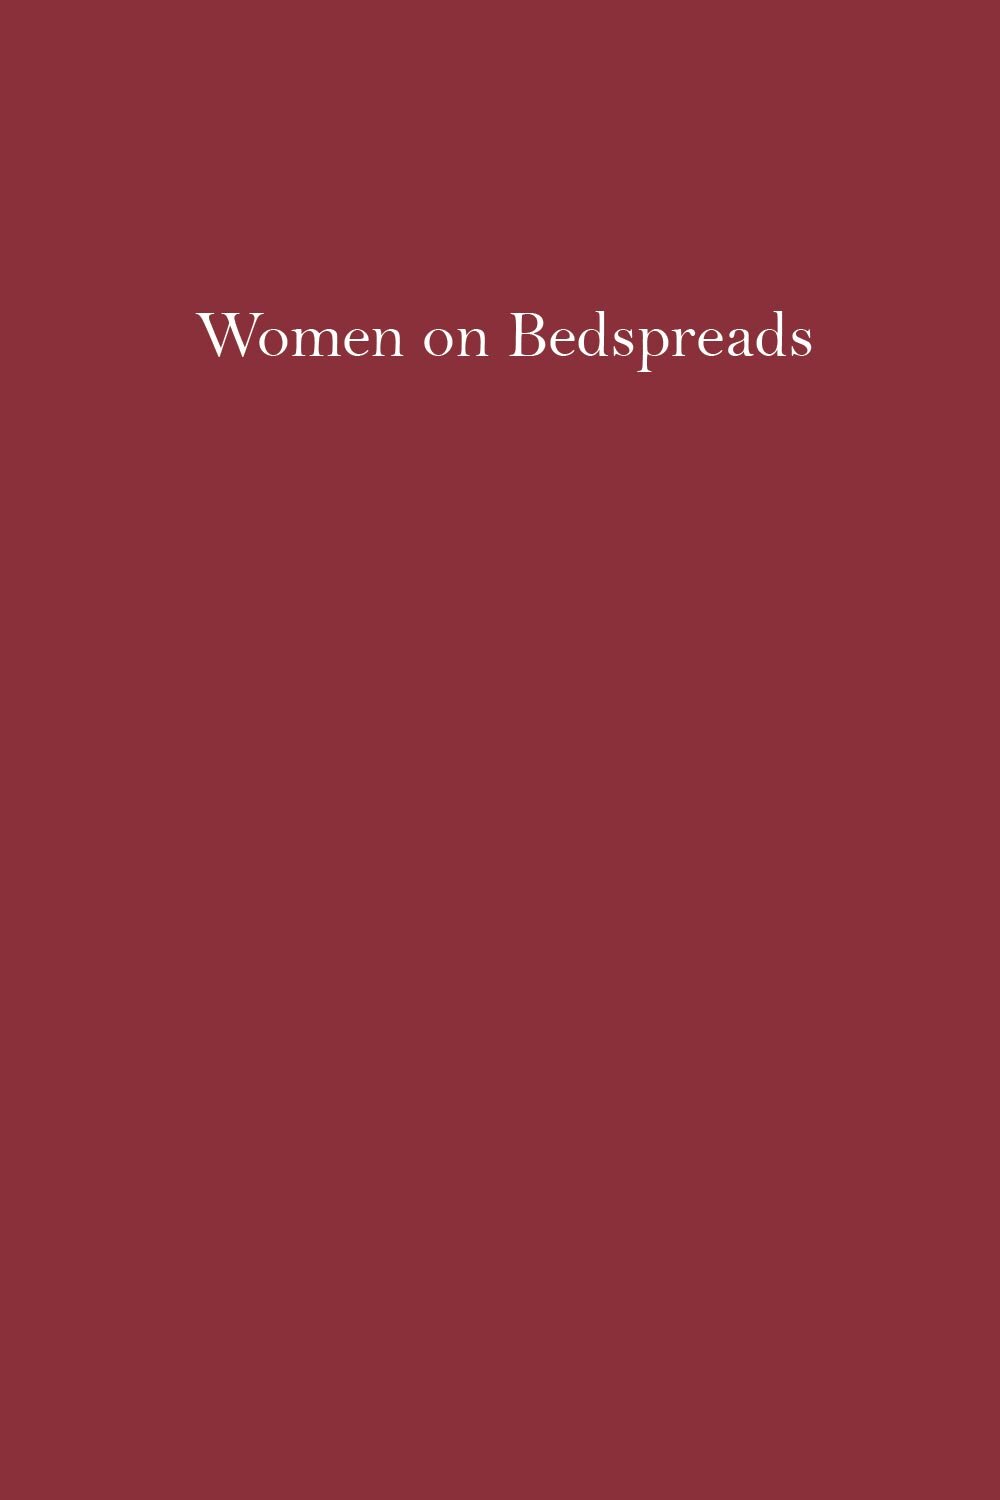 women-on-bedspreads-book-cover.jpg